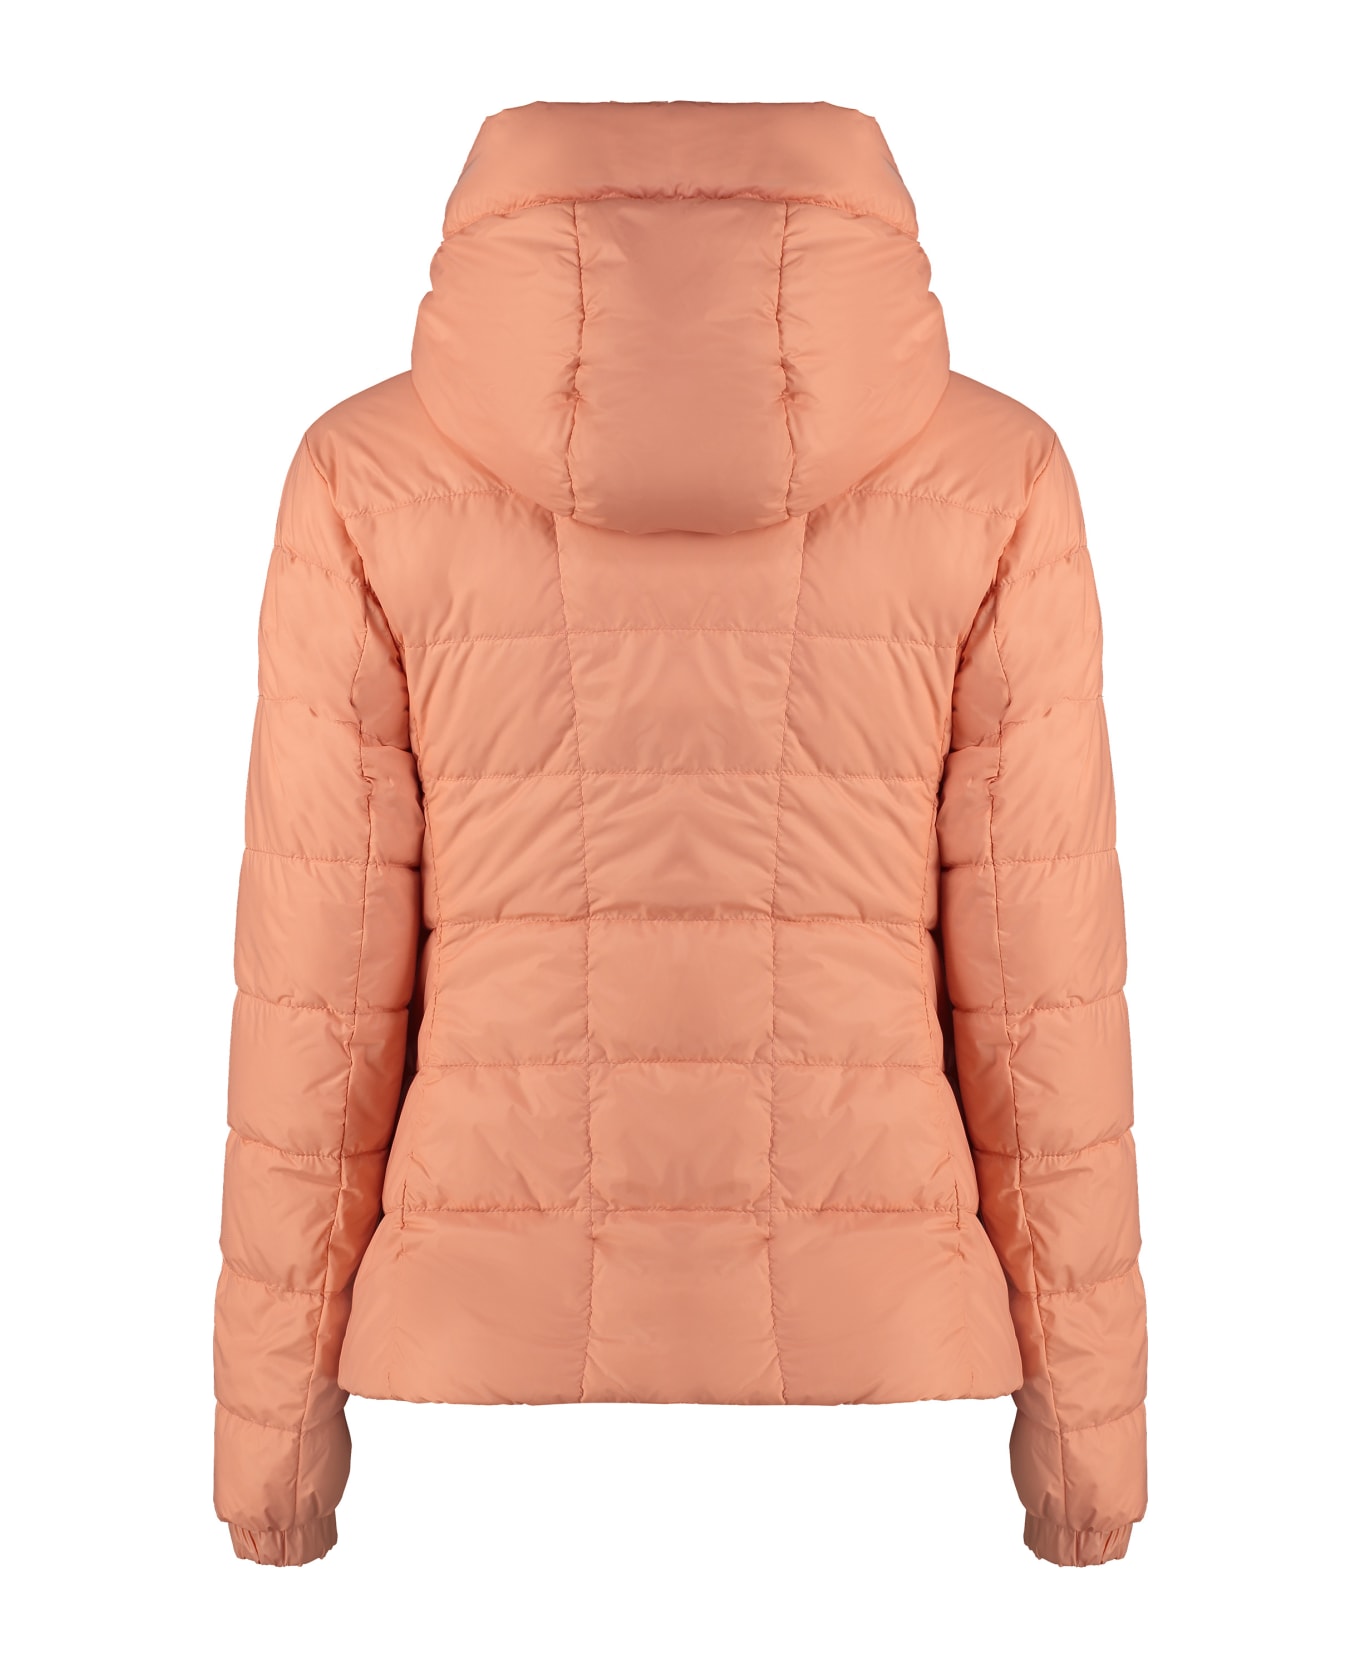 Canada Goose Abbott Hooded Techno Fabric Down Jacket - Salmon pink ダウンジャケット